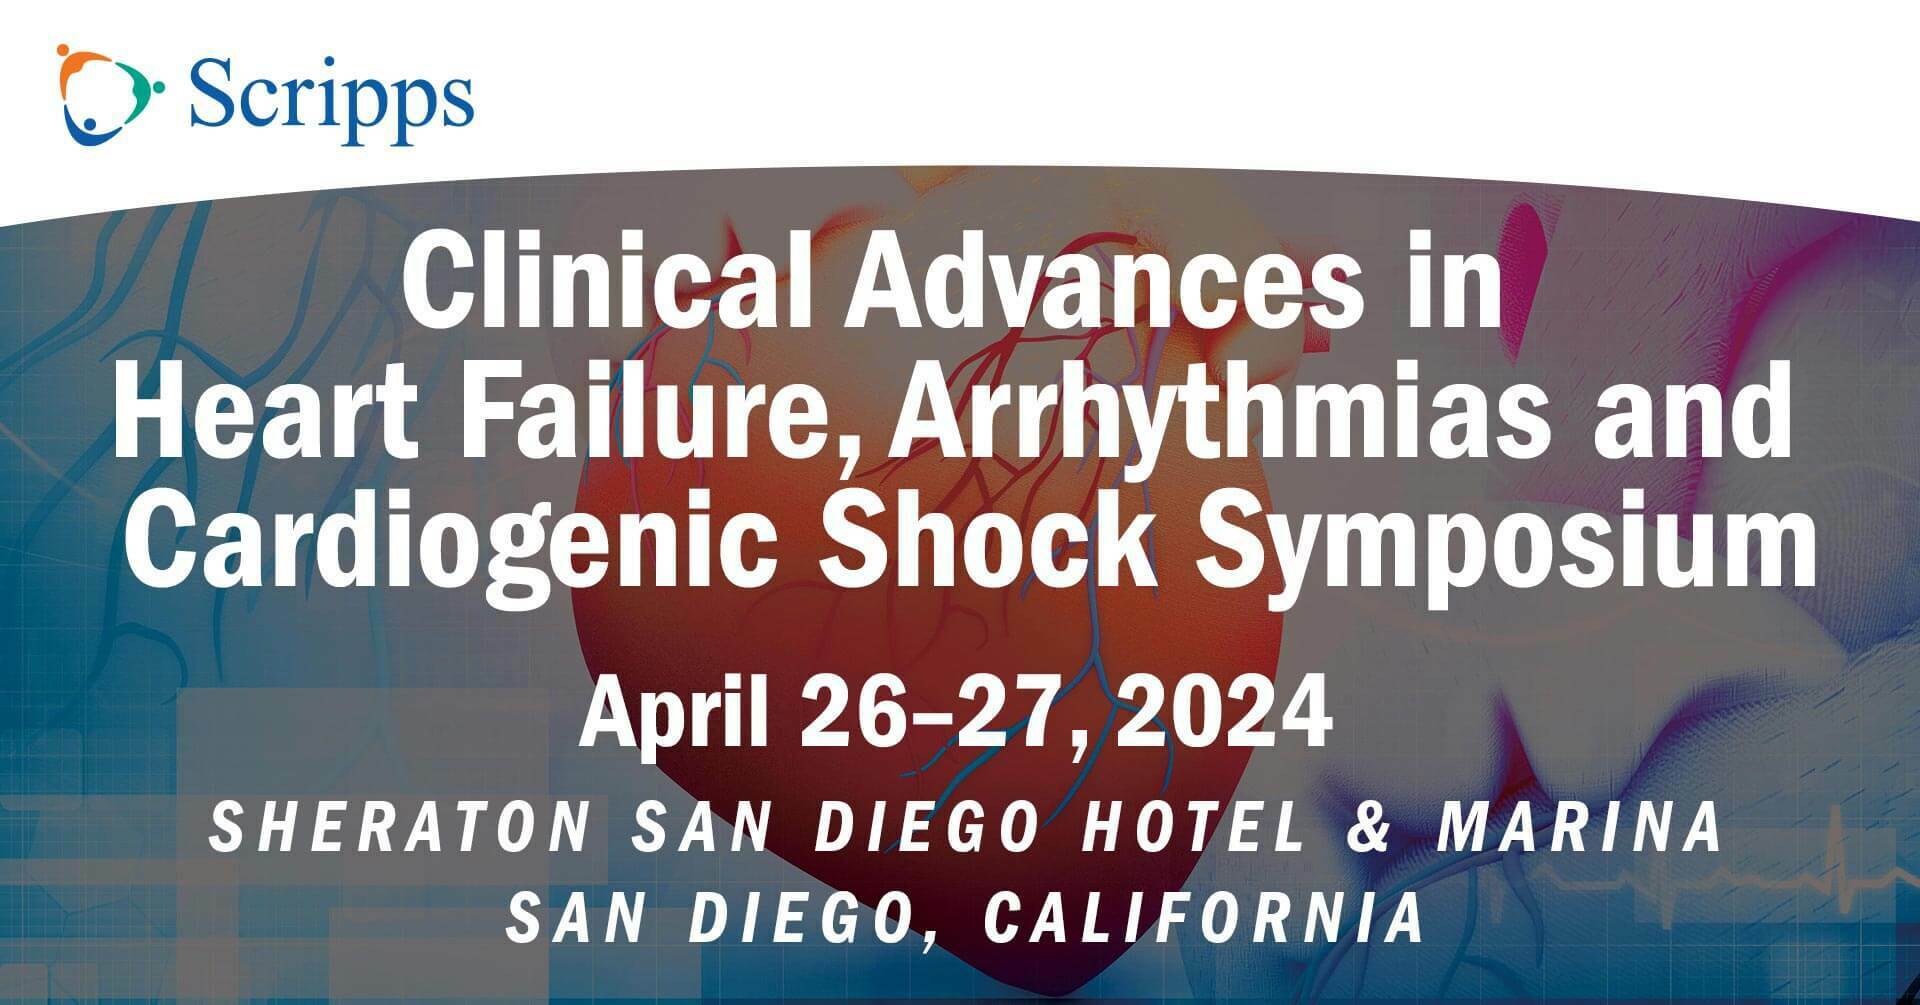 Clinical Advances in Heart Failure, Arrhythmias and Cardiogenic Shock Symposium